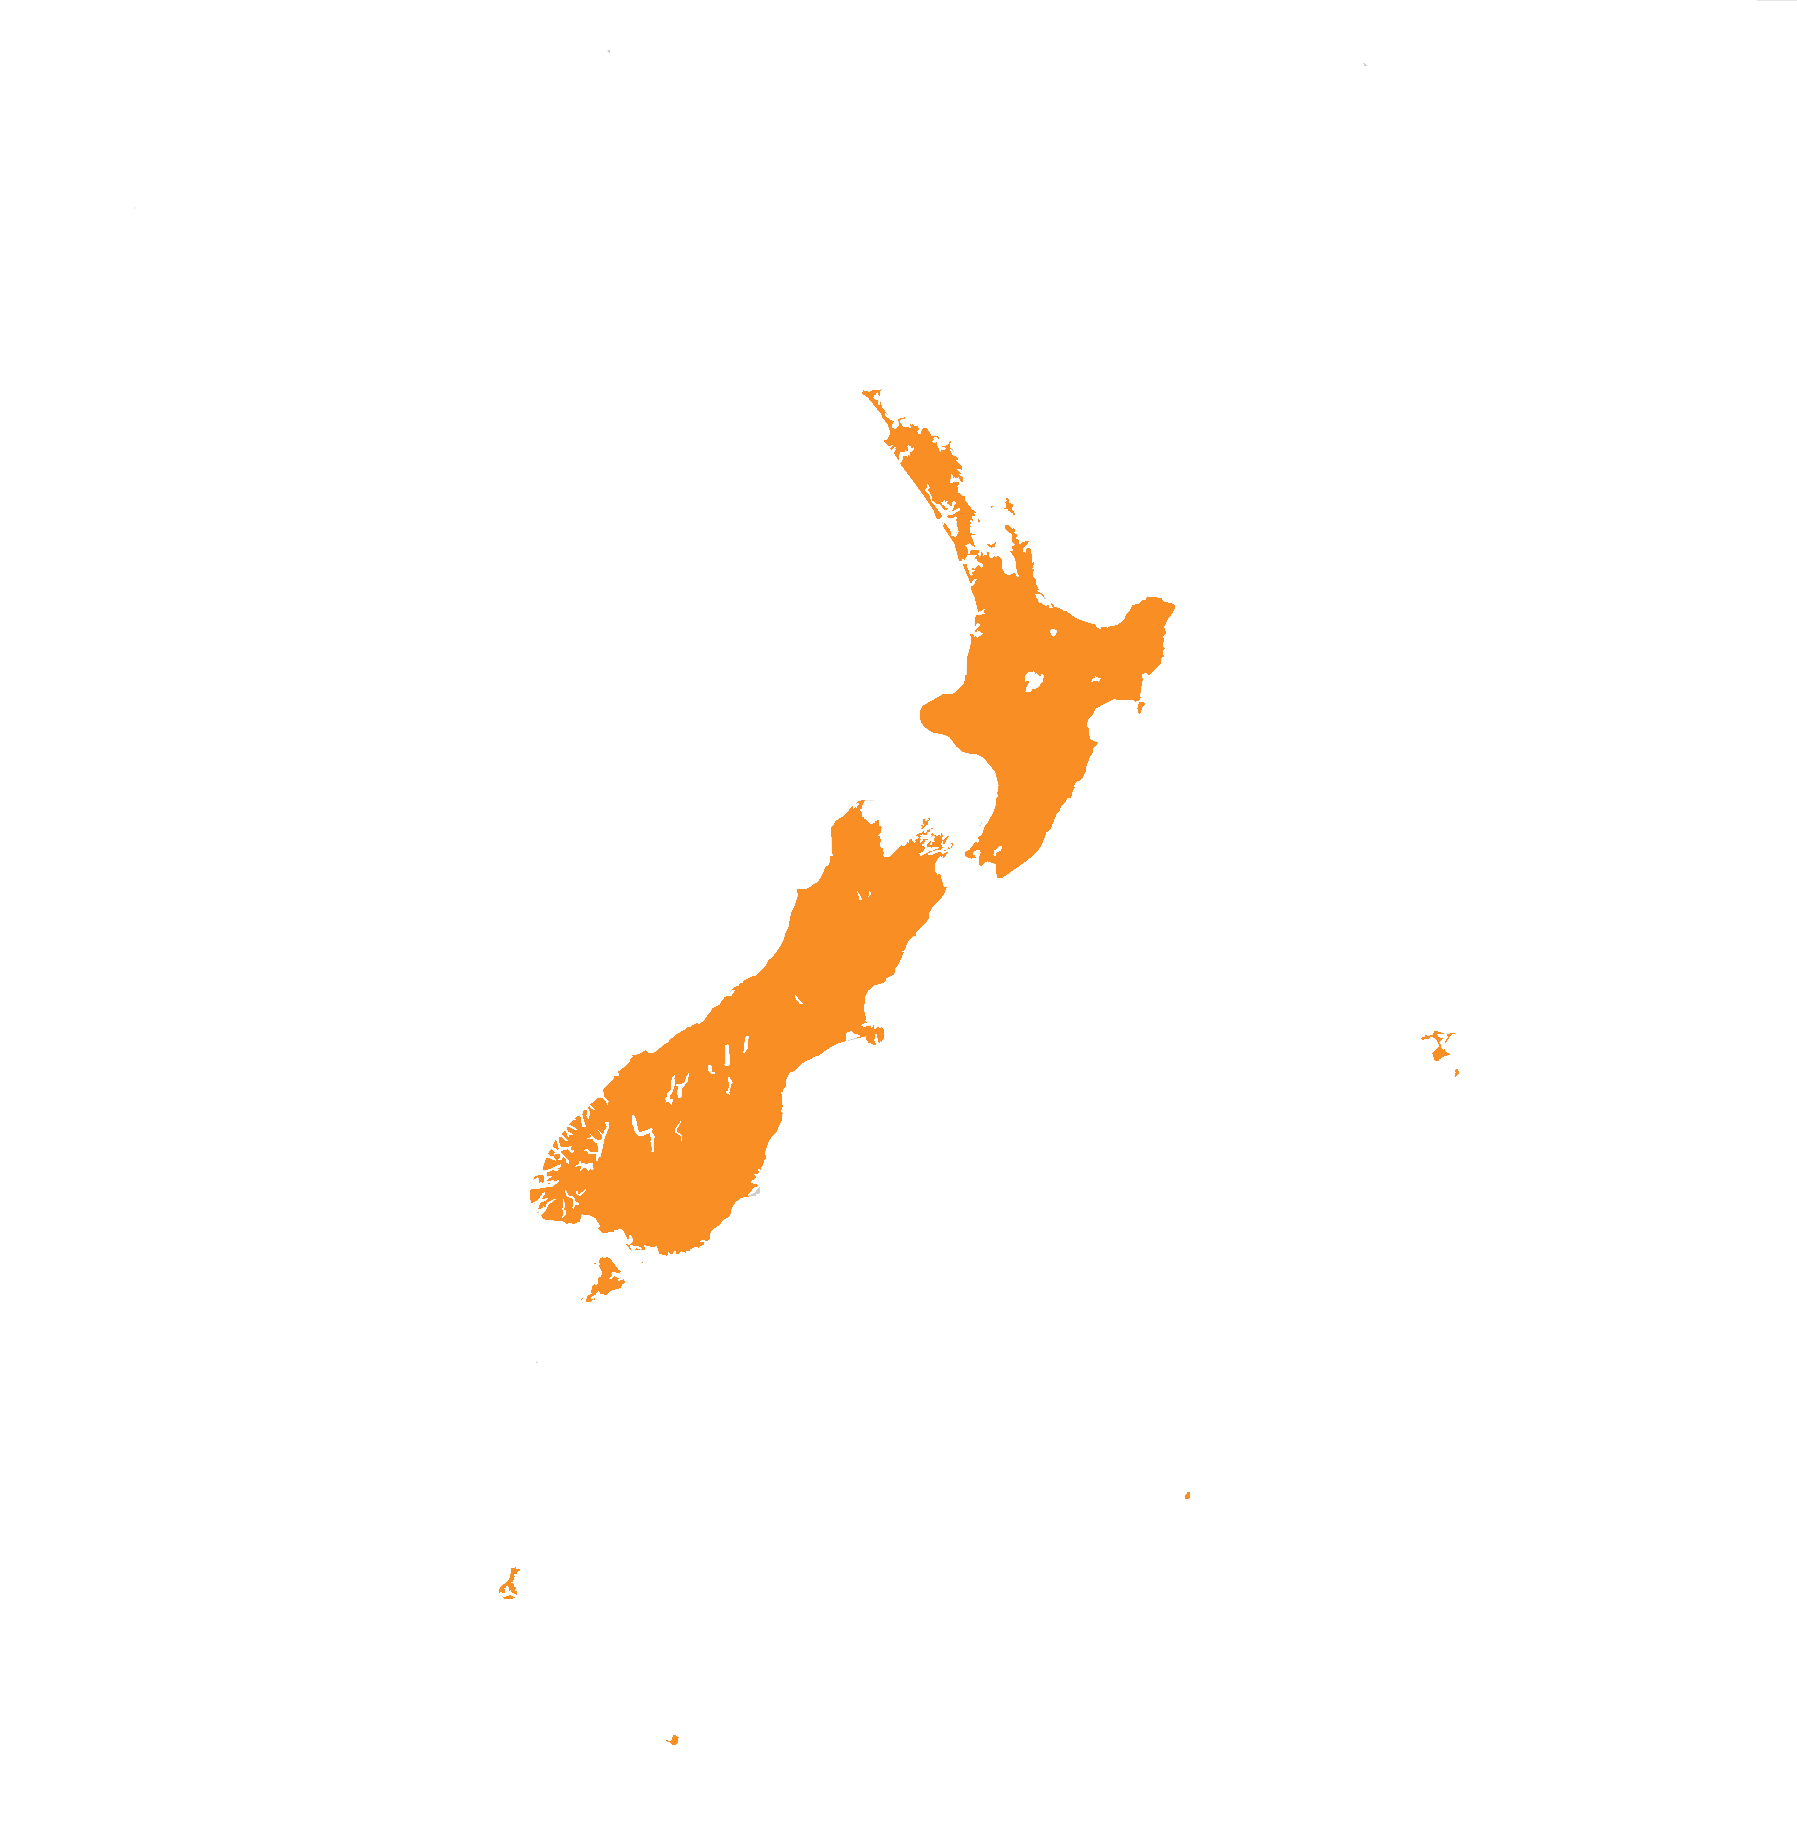 New Zealand (1898 - ?) Profile